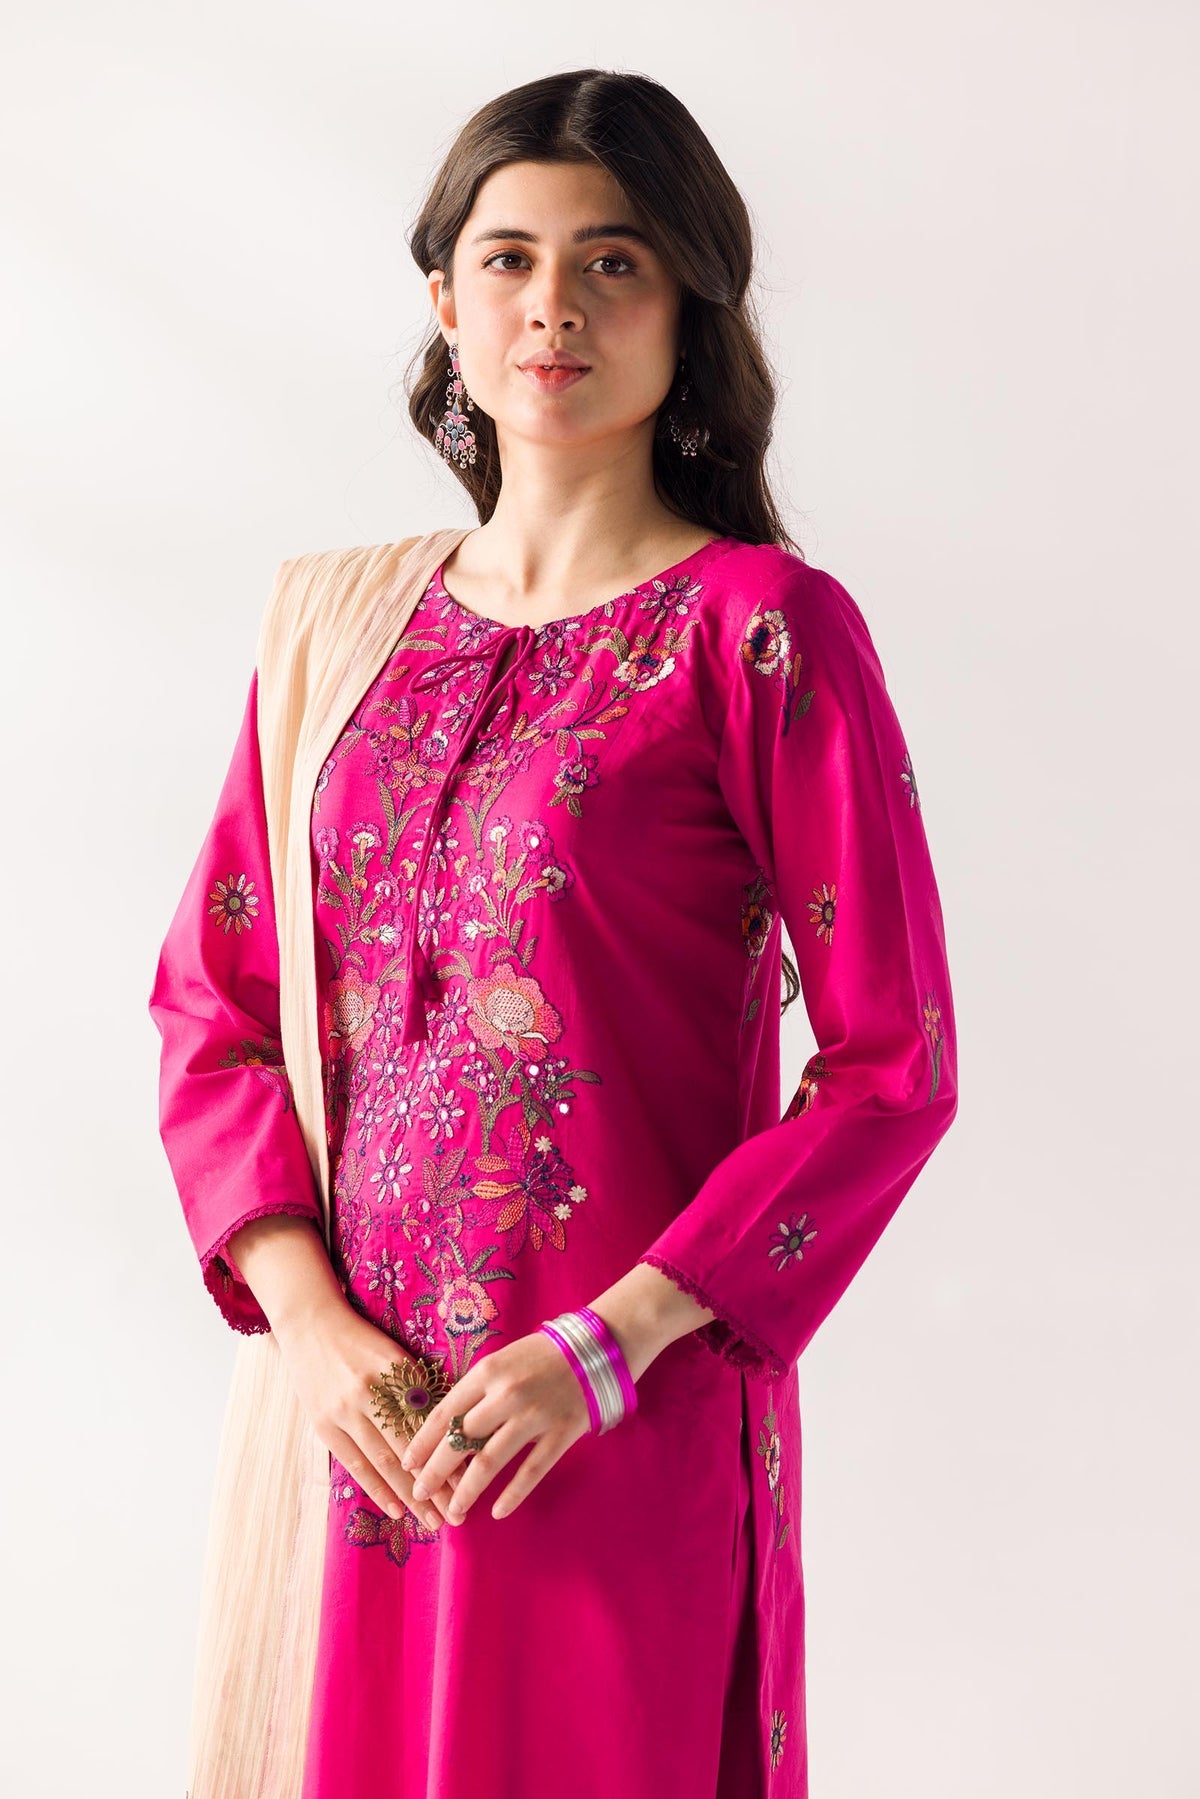 Taanabaana | Mem Saab Collection | M3252 - Khanumjan  Pakistani Clothes and Designer Dresses in UK, USA 